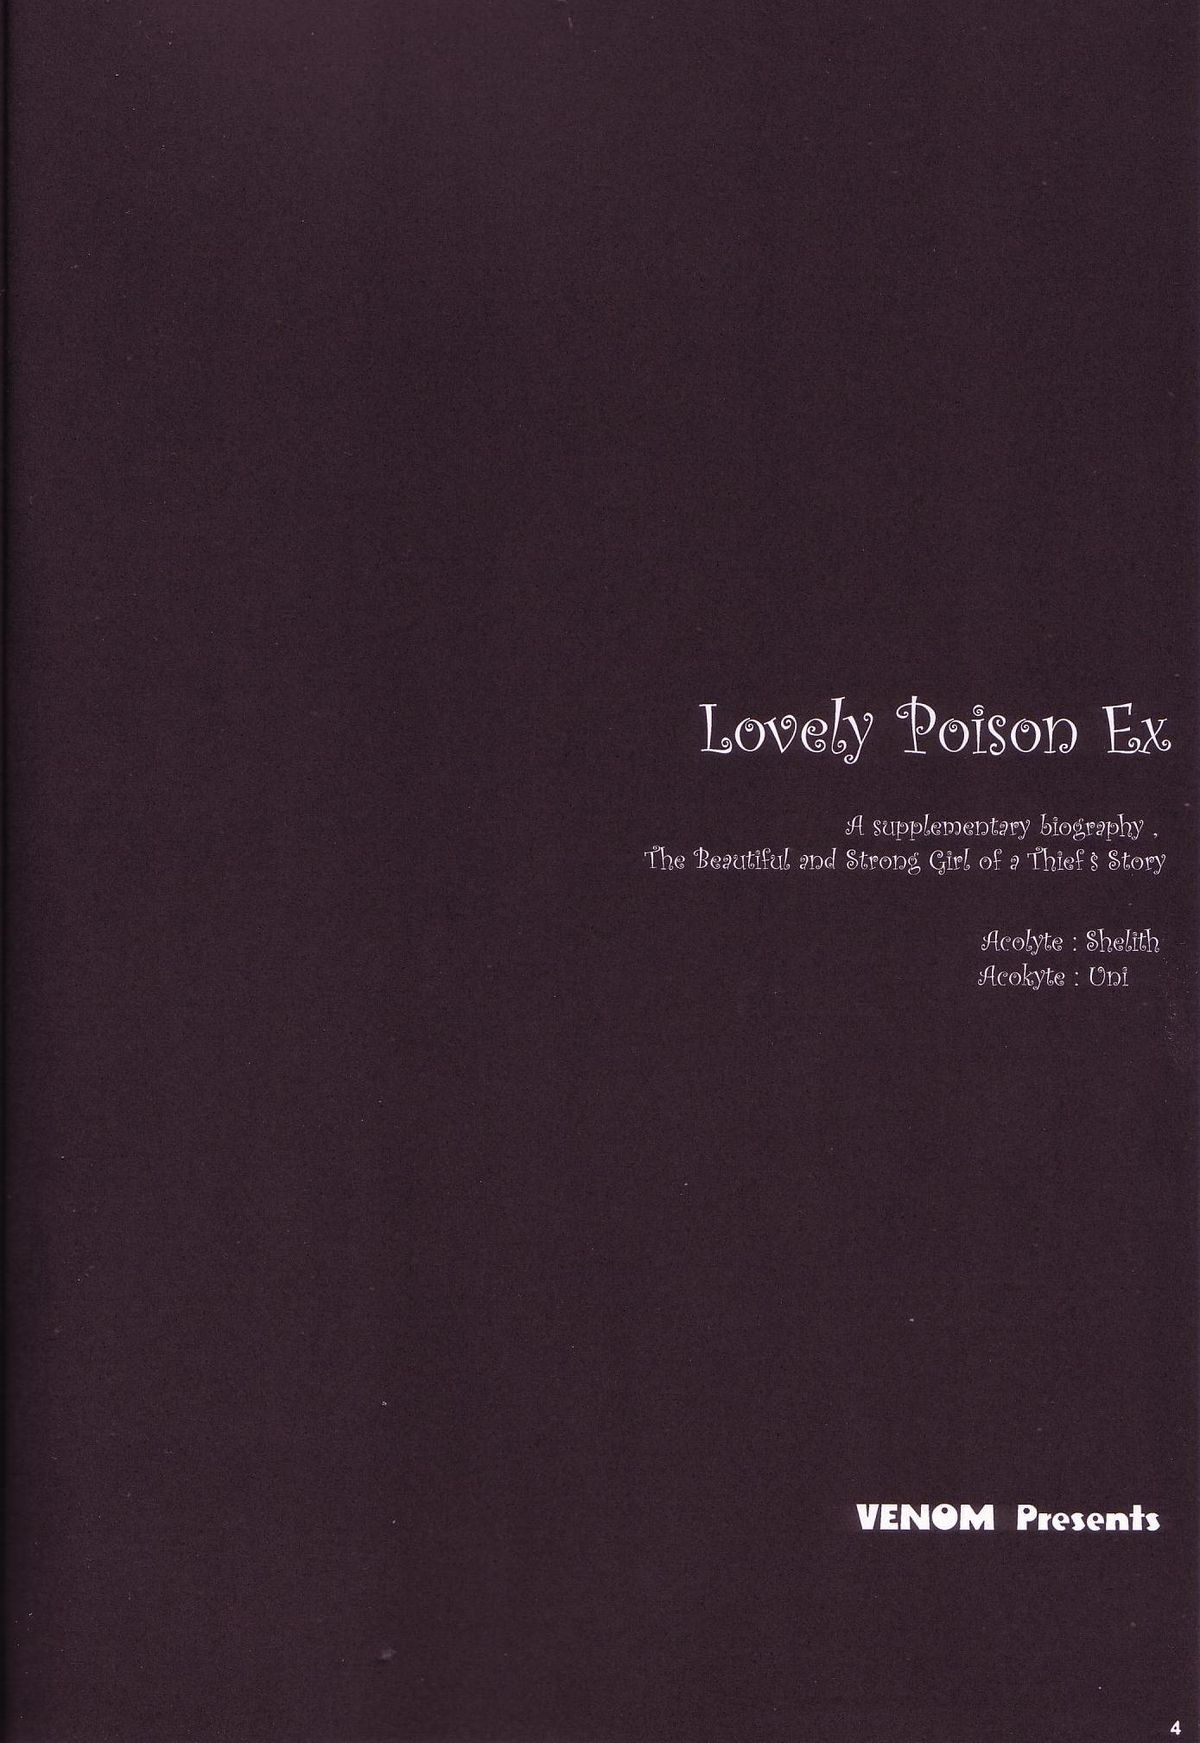 (C69) [VENOM (或十せねか、Rusty Soul)] Lovely Poison Ex (ラグナロクオンライン)